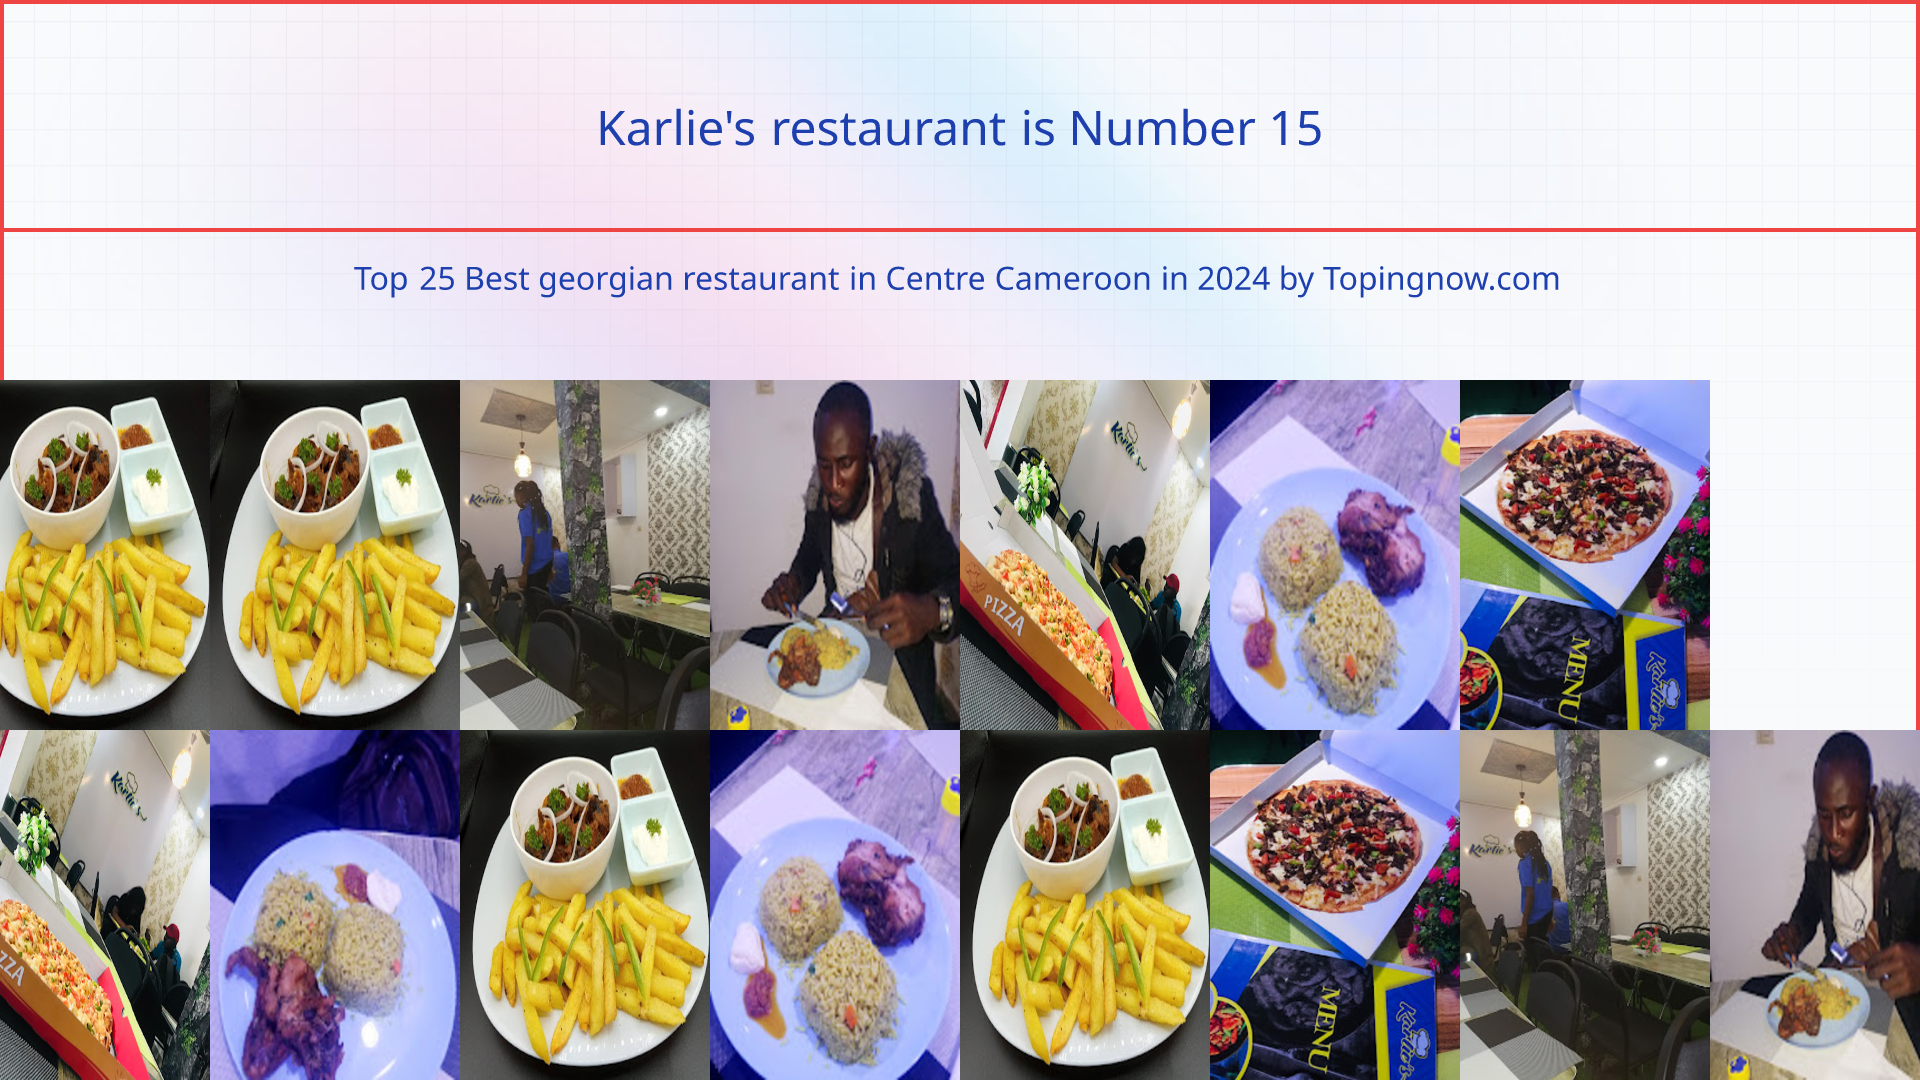 Karlie's restaurant: Top 25 Best georgian restaurant in Centre Cameroon in 2024